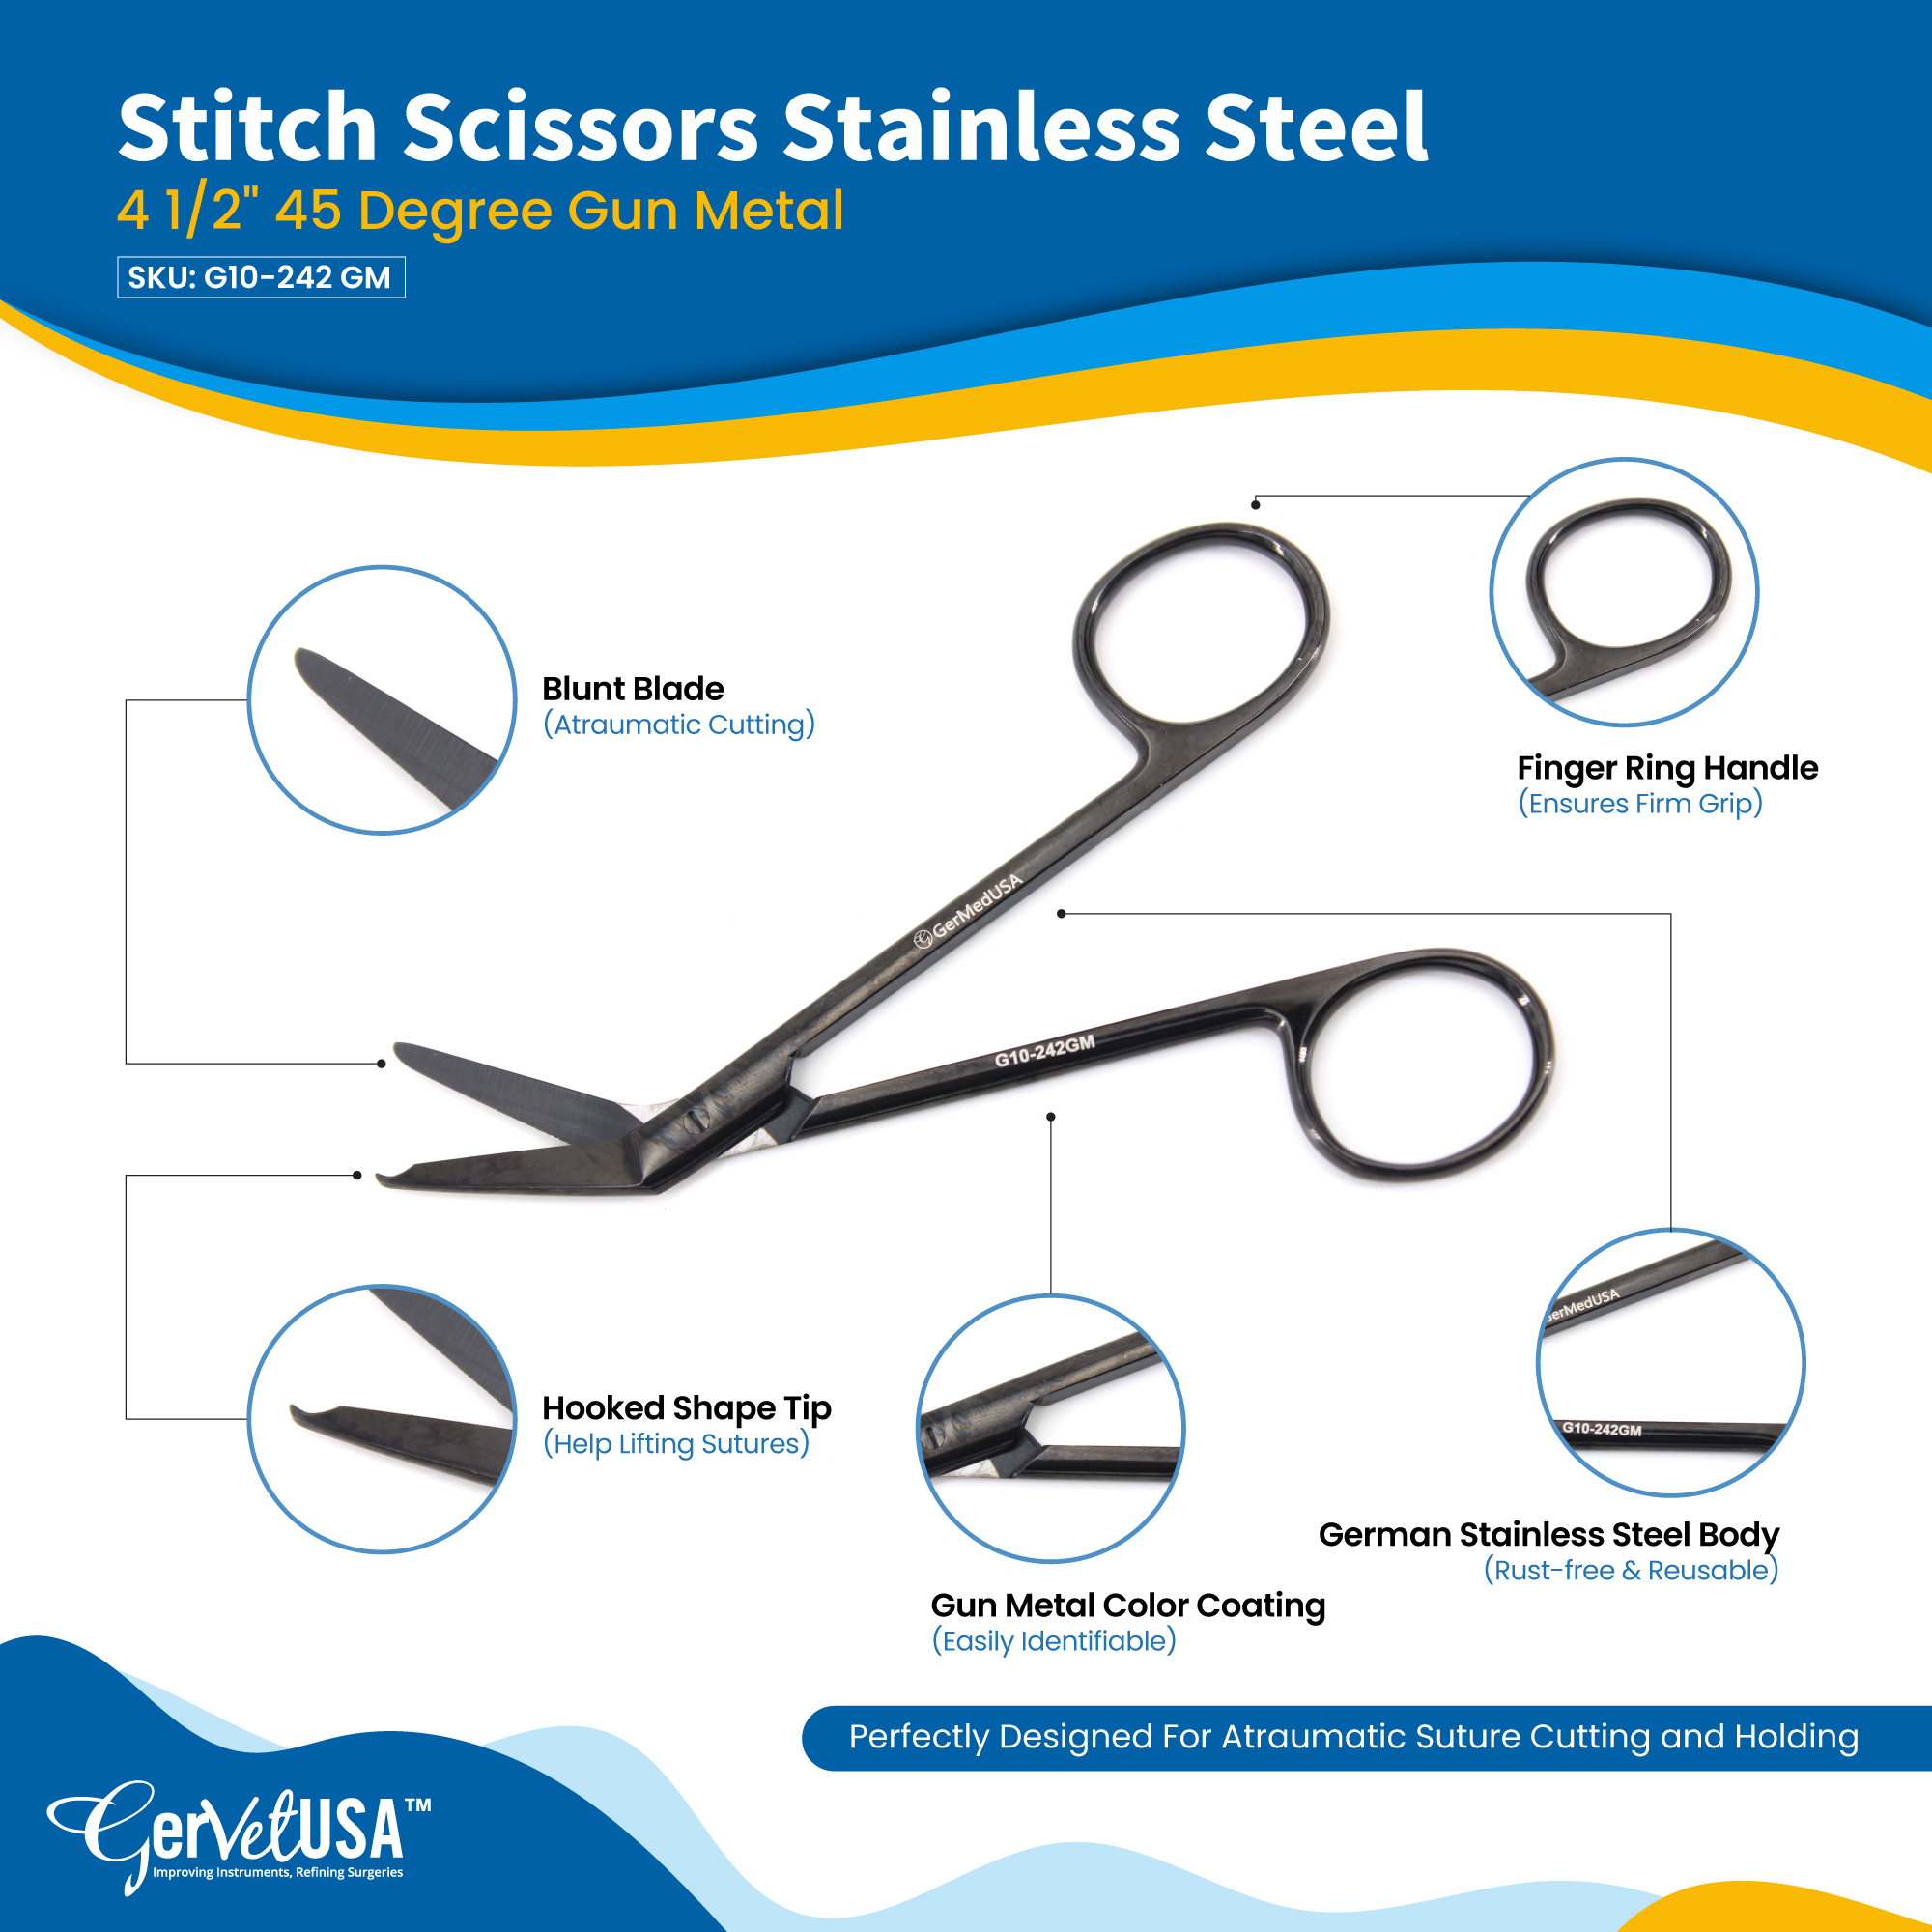 Stitch Scissors Stainless Steel 4 1/2" 45 Degree Gun Metal